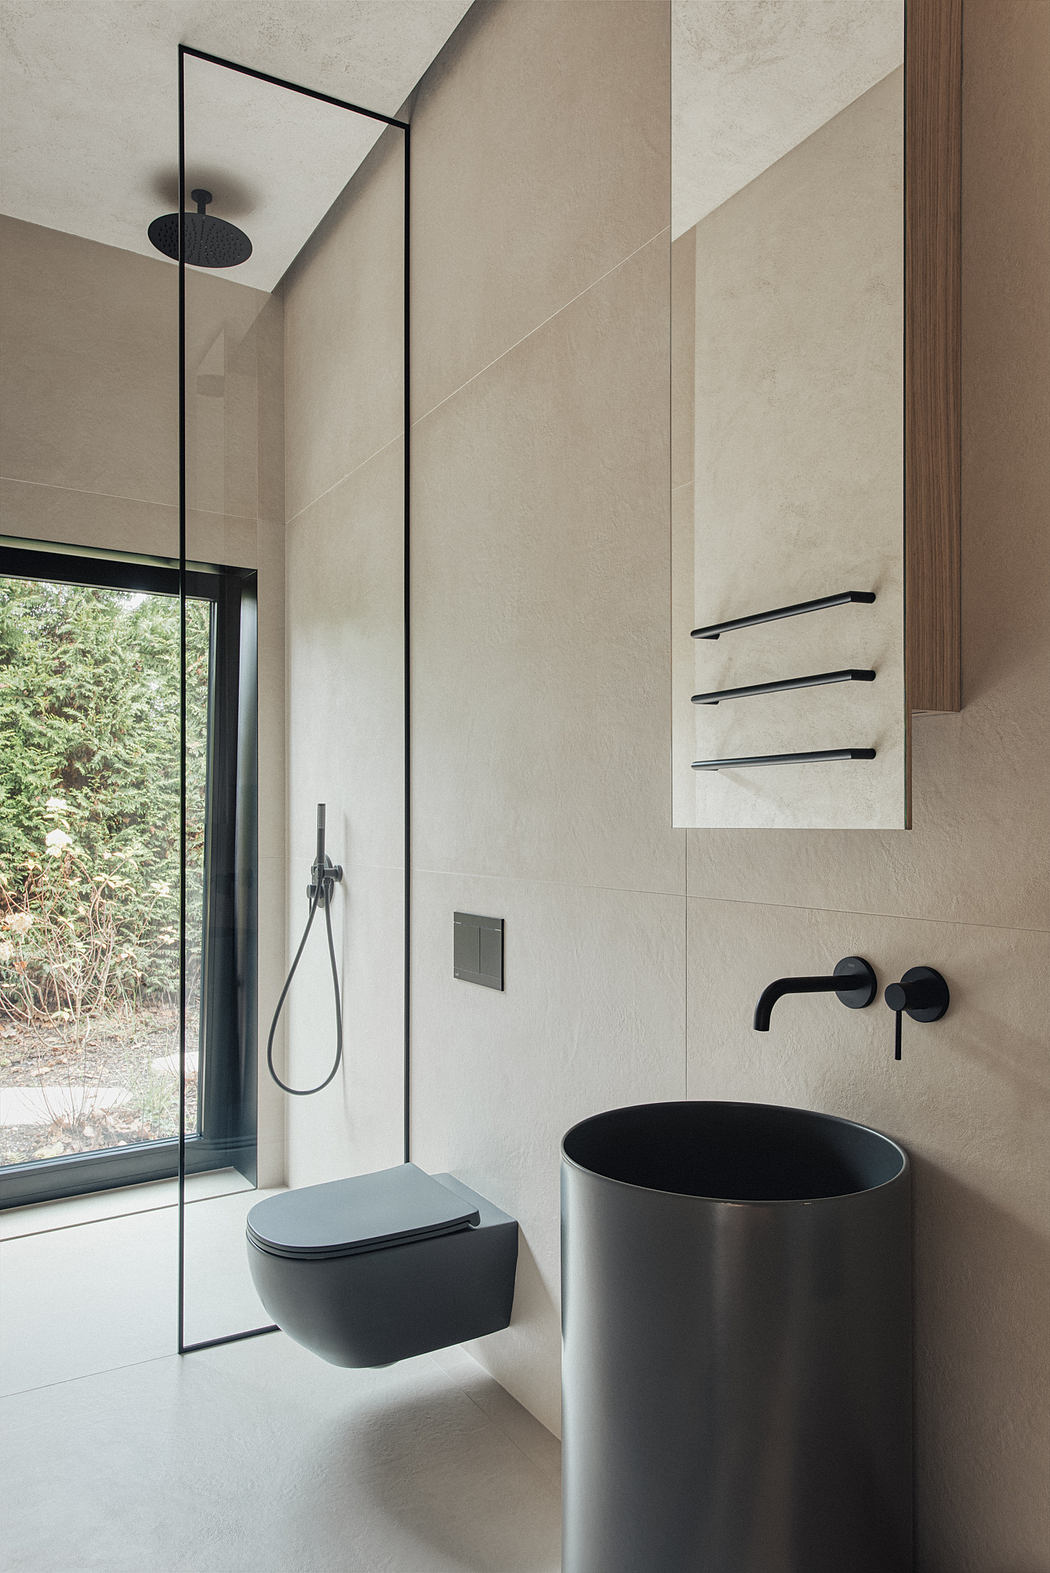 Modern minimalist bathroom with sleek black fixtures, freestanding basin, and large glass window.